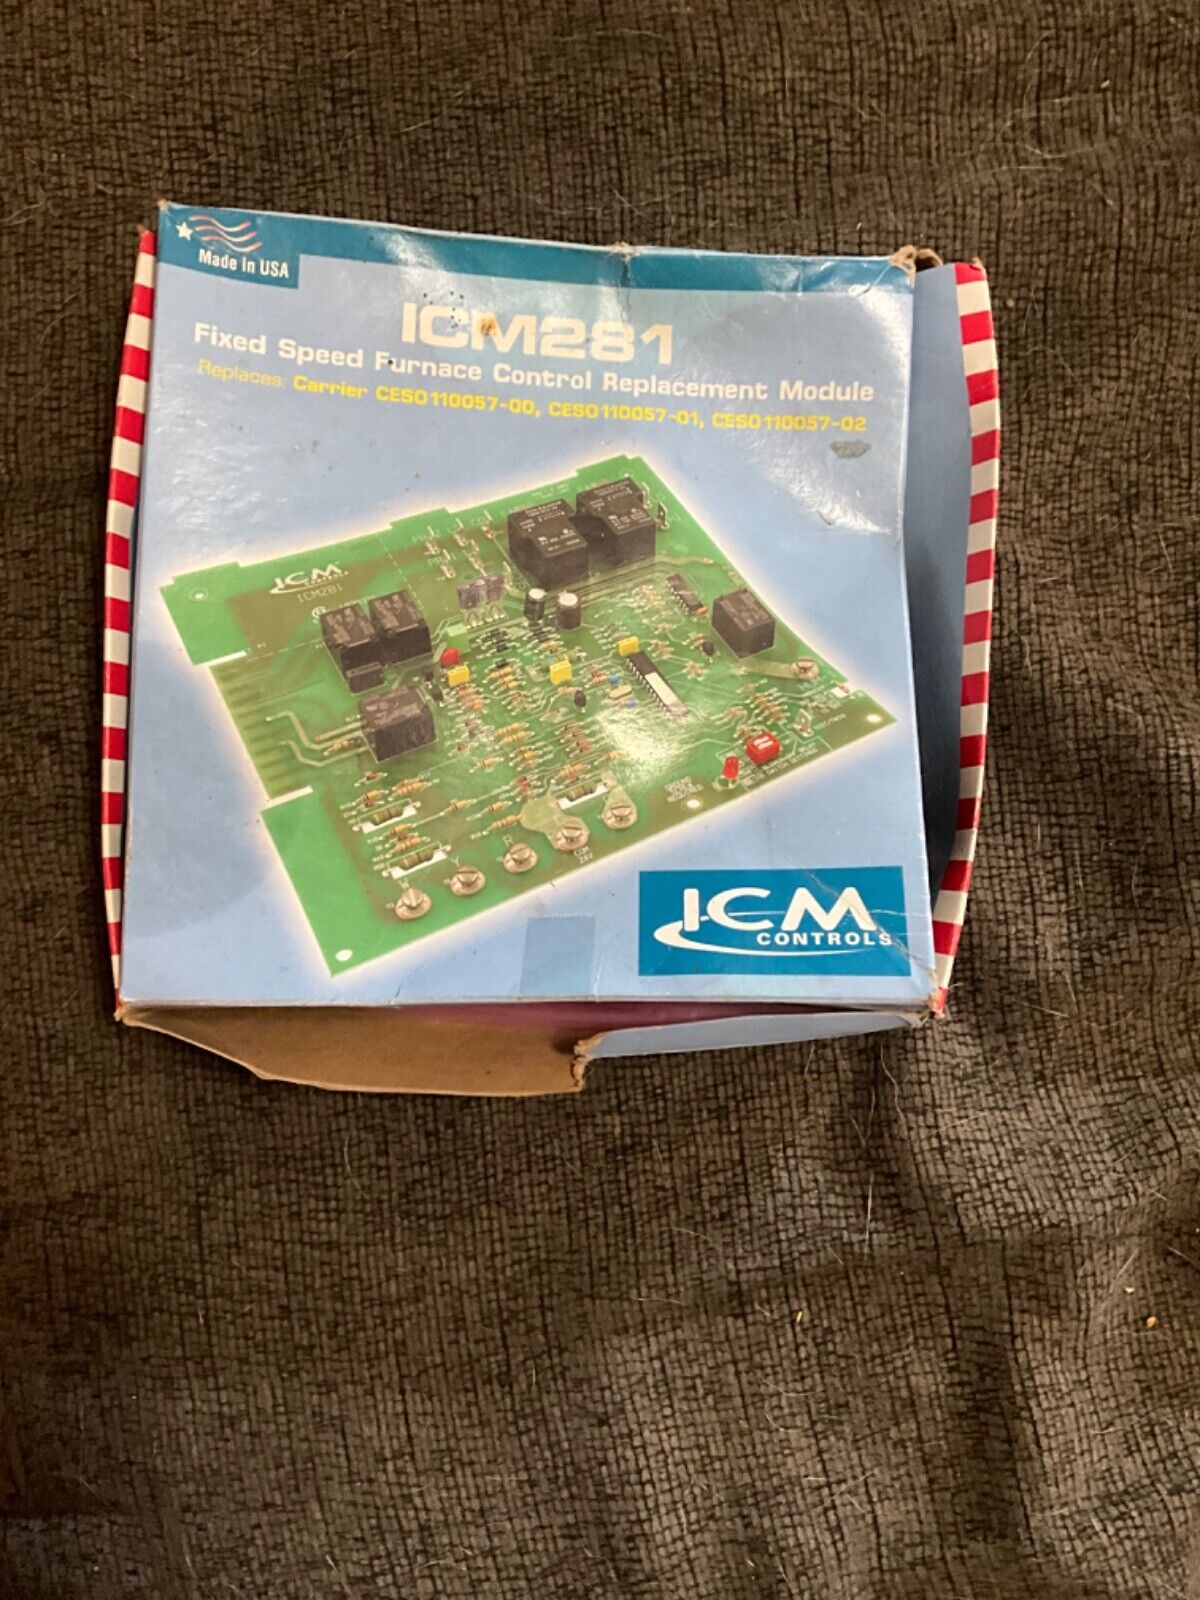 ICM281 furnace control board carrier